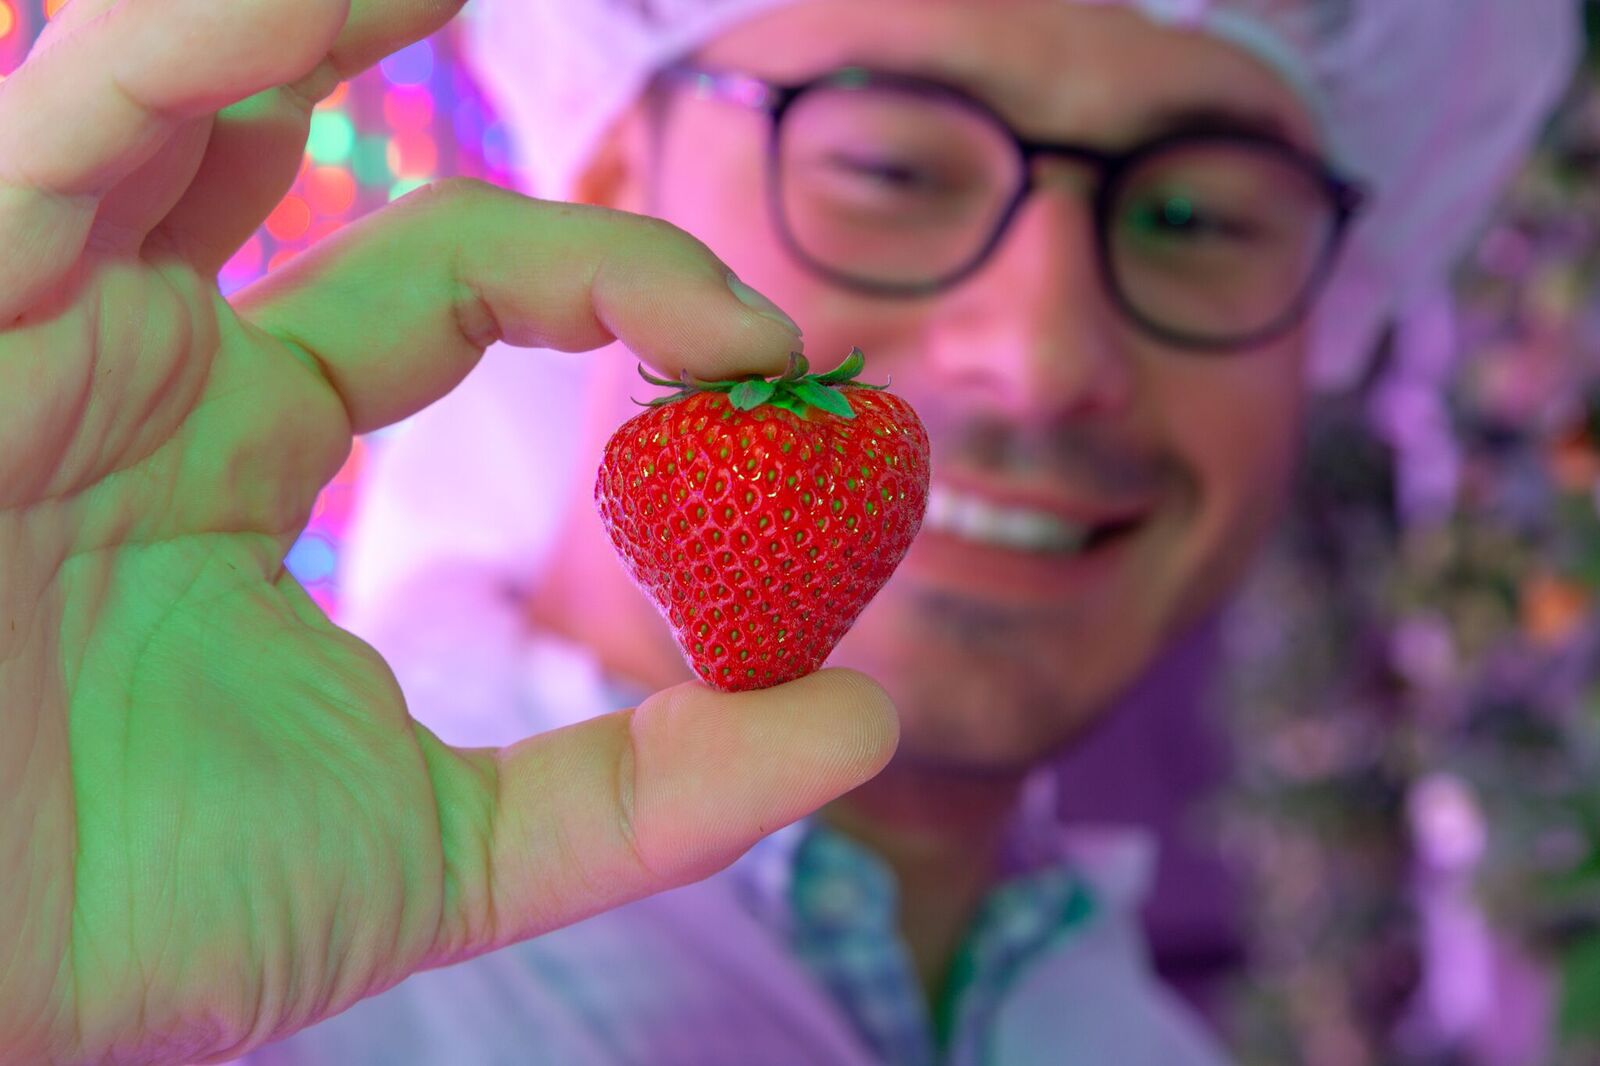 agricool strawberries dubai 2.jpeg